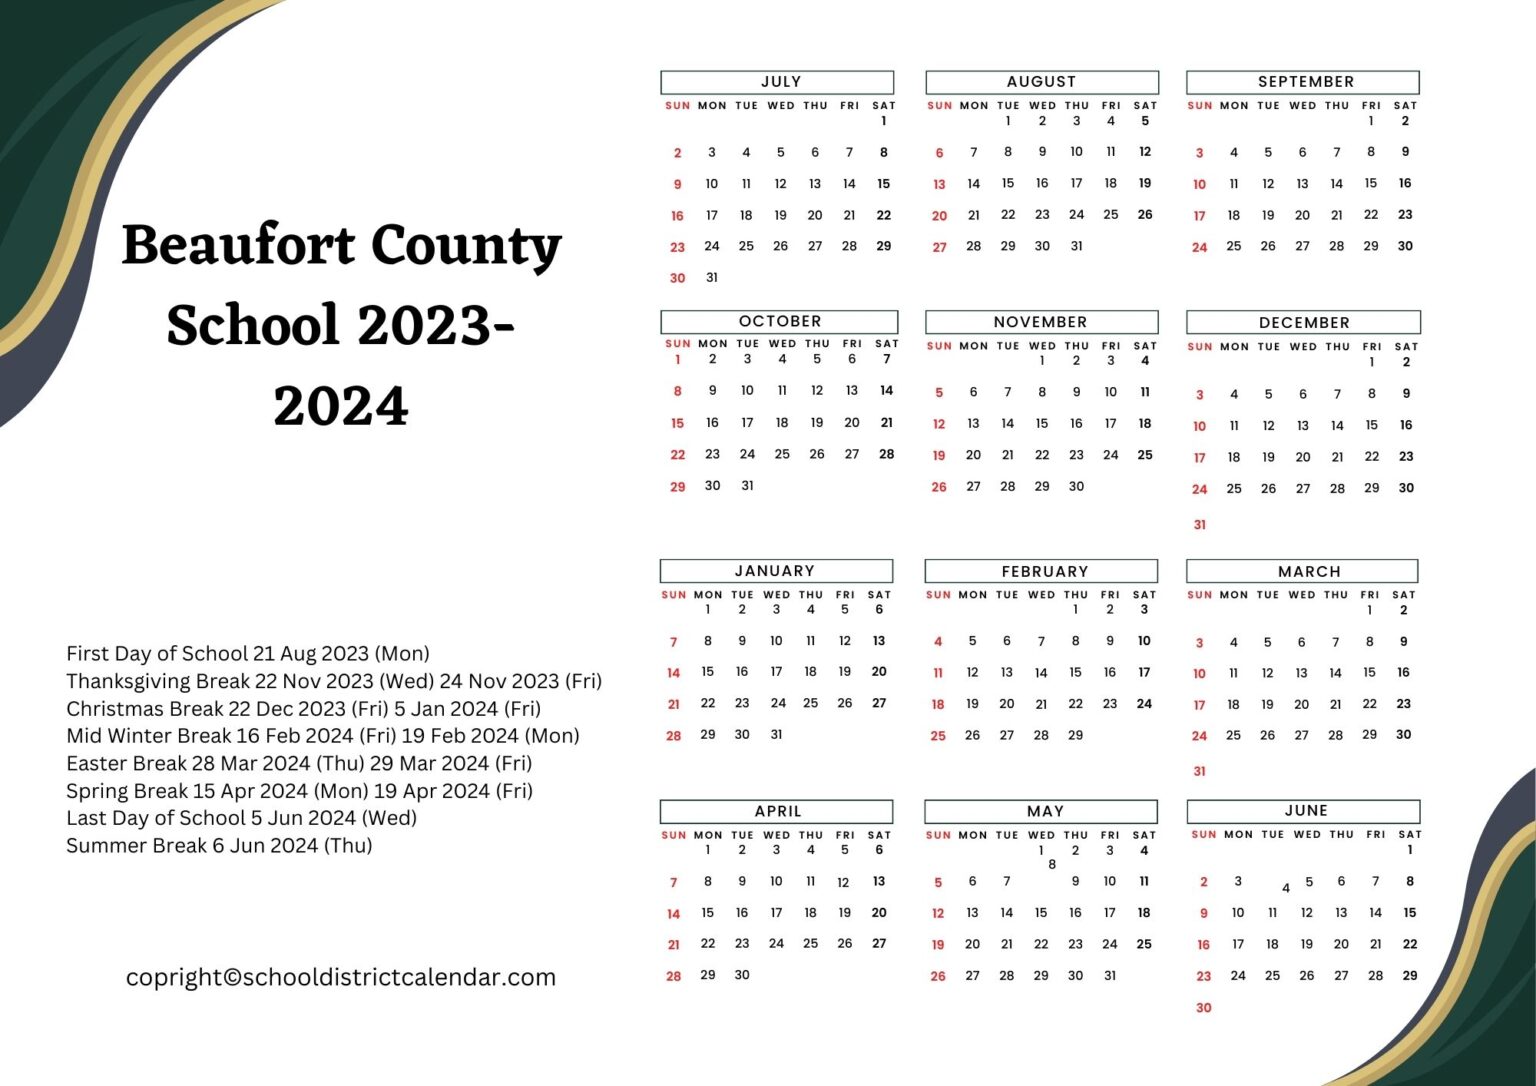 beaufort-county-school-calendar-holidays-2023-2024